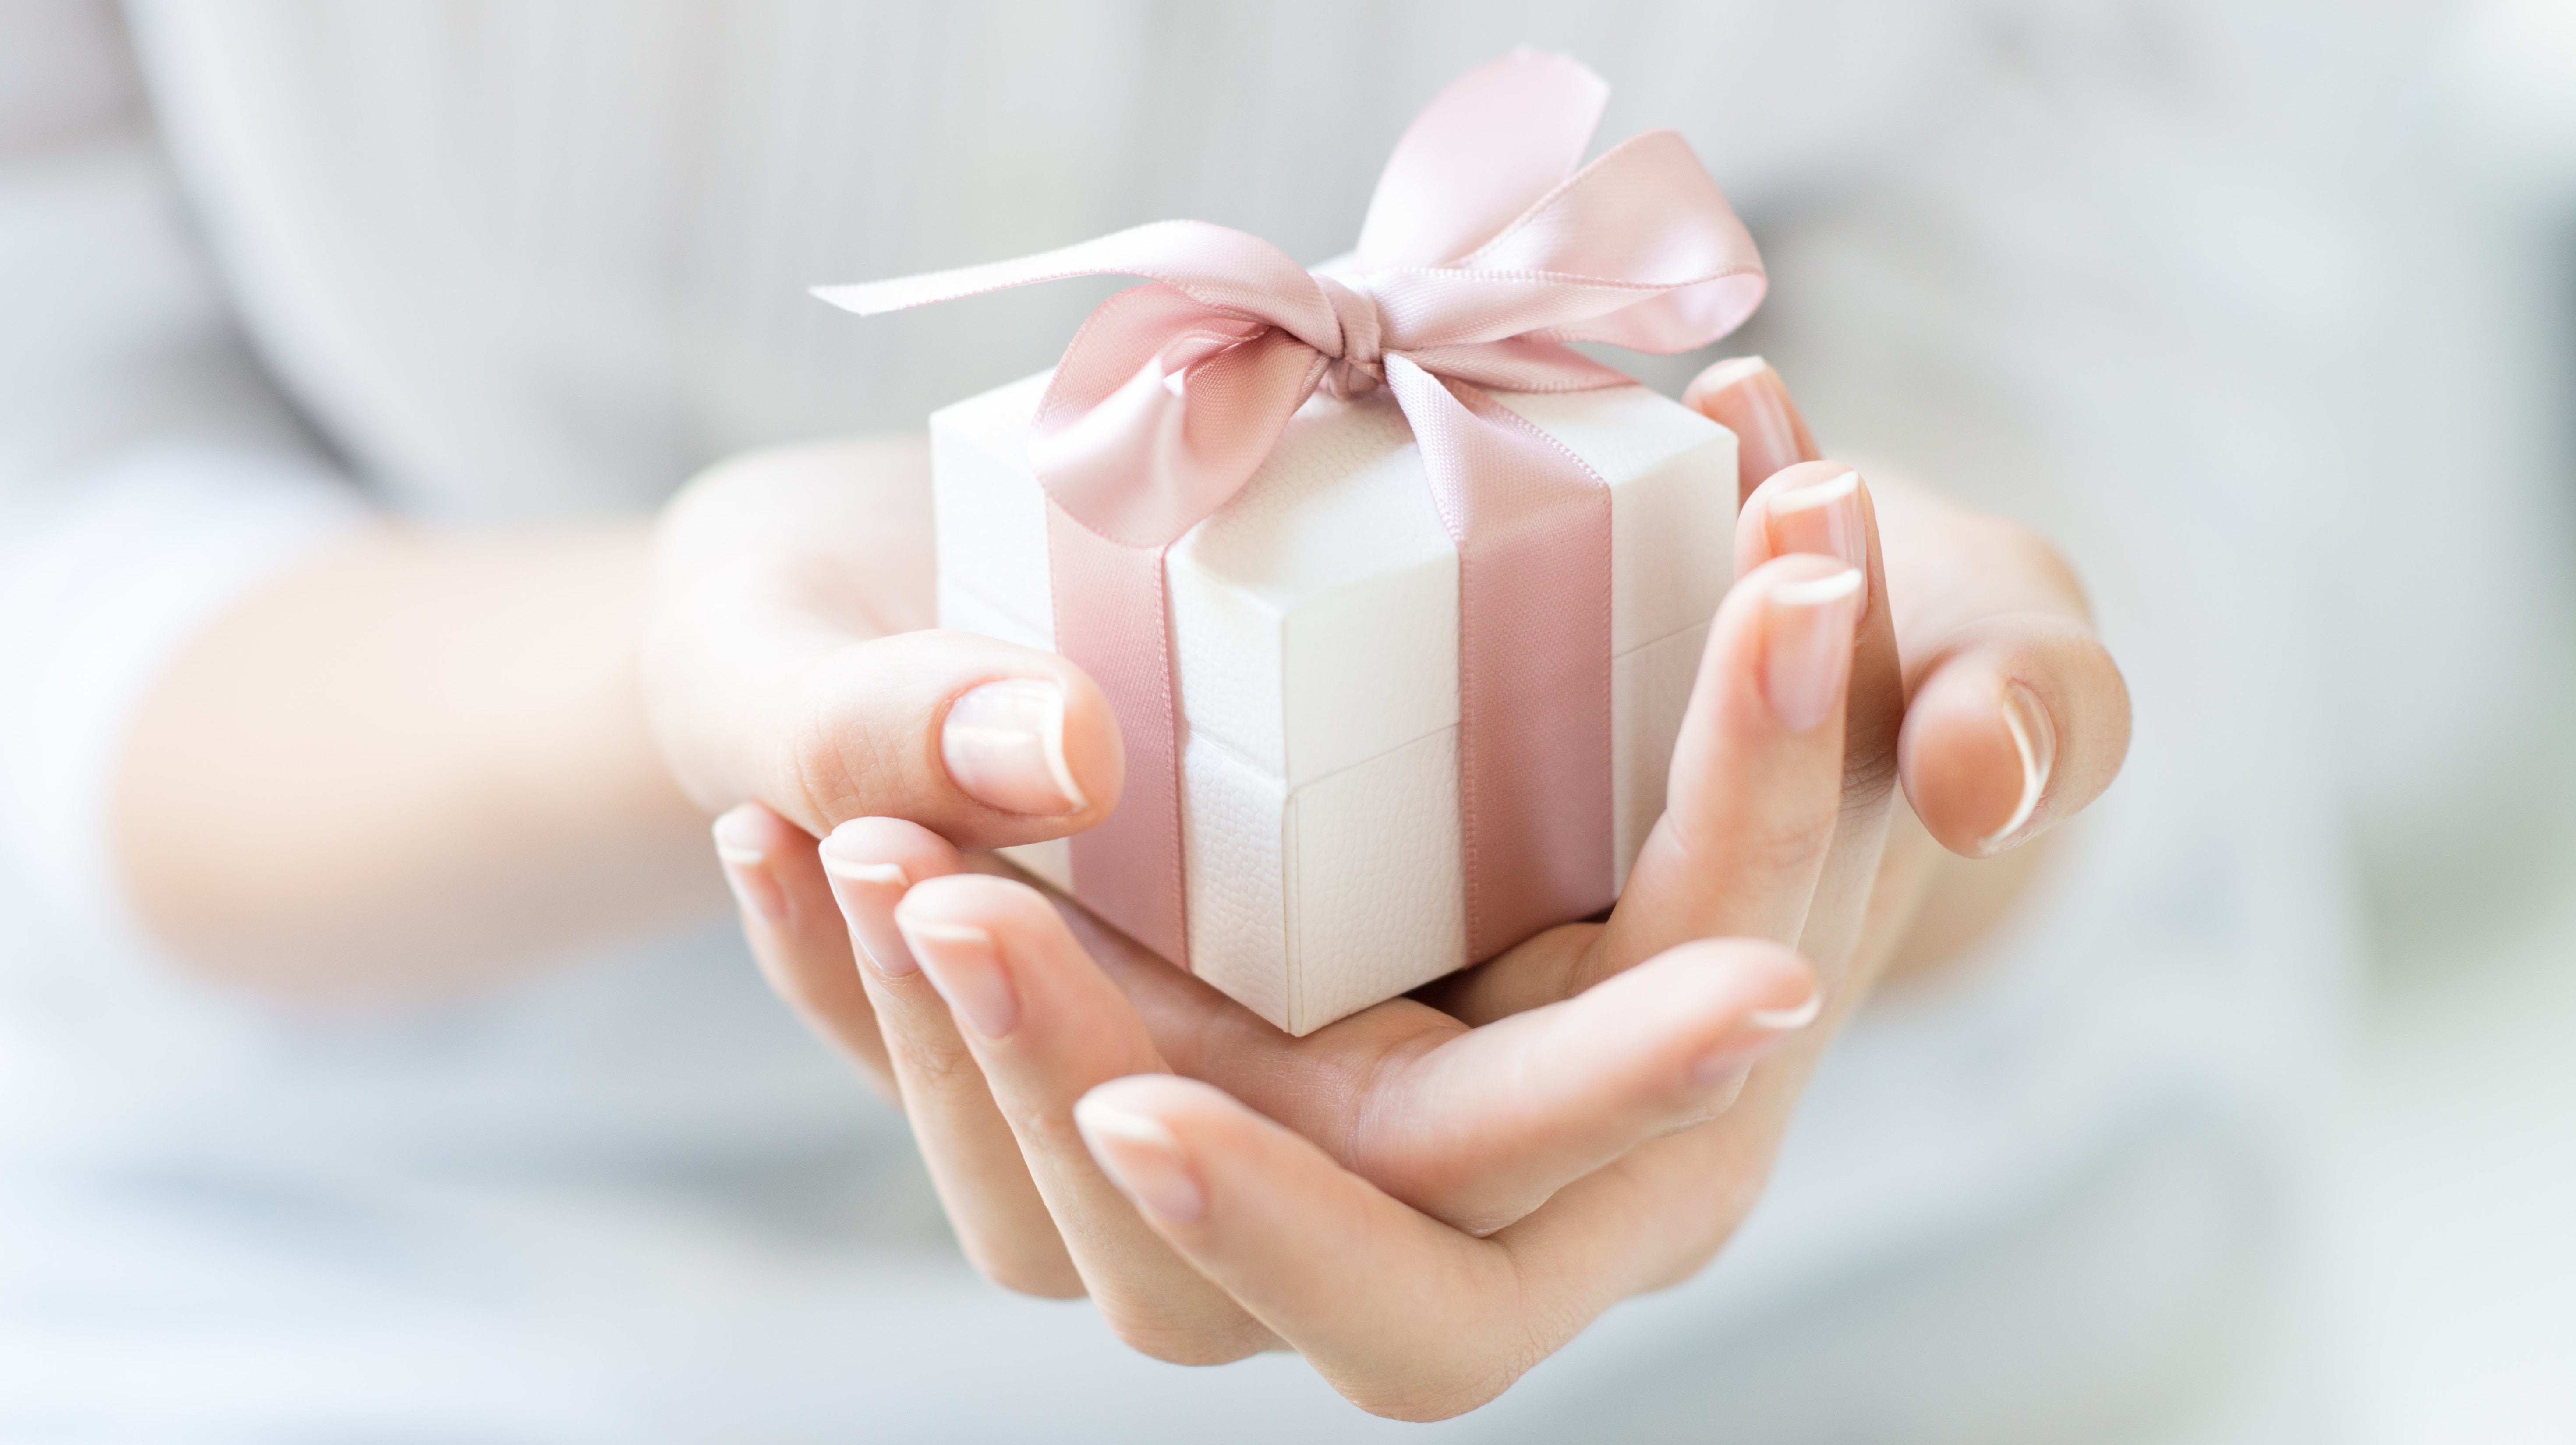 Avoid Those ‘Secret Sister’ Gift Exchanges On Facebook